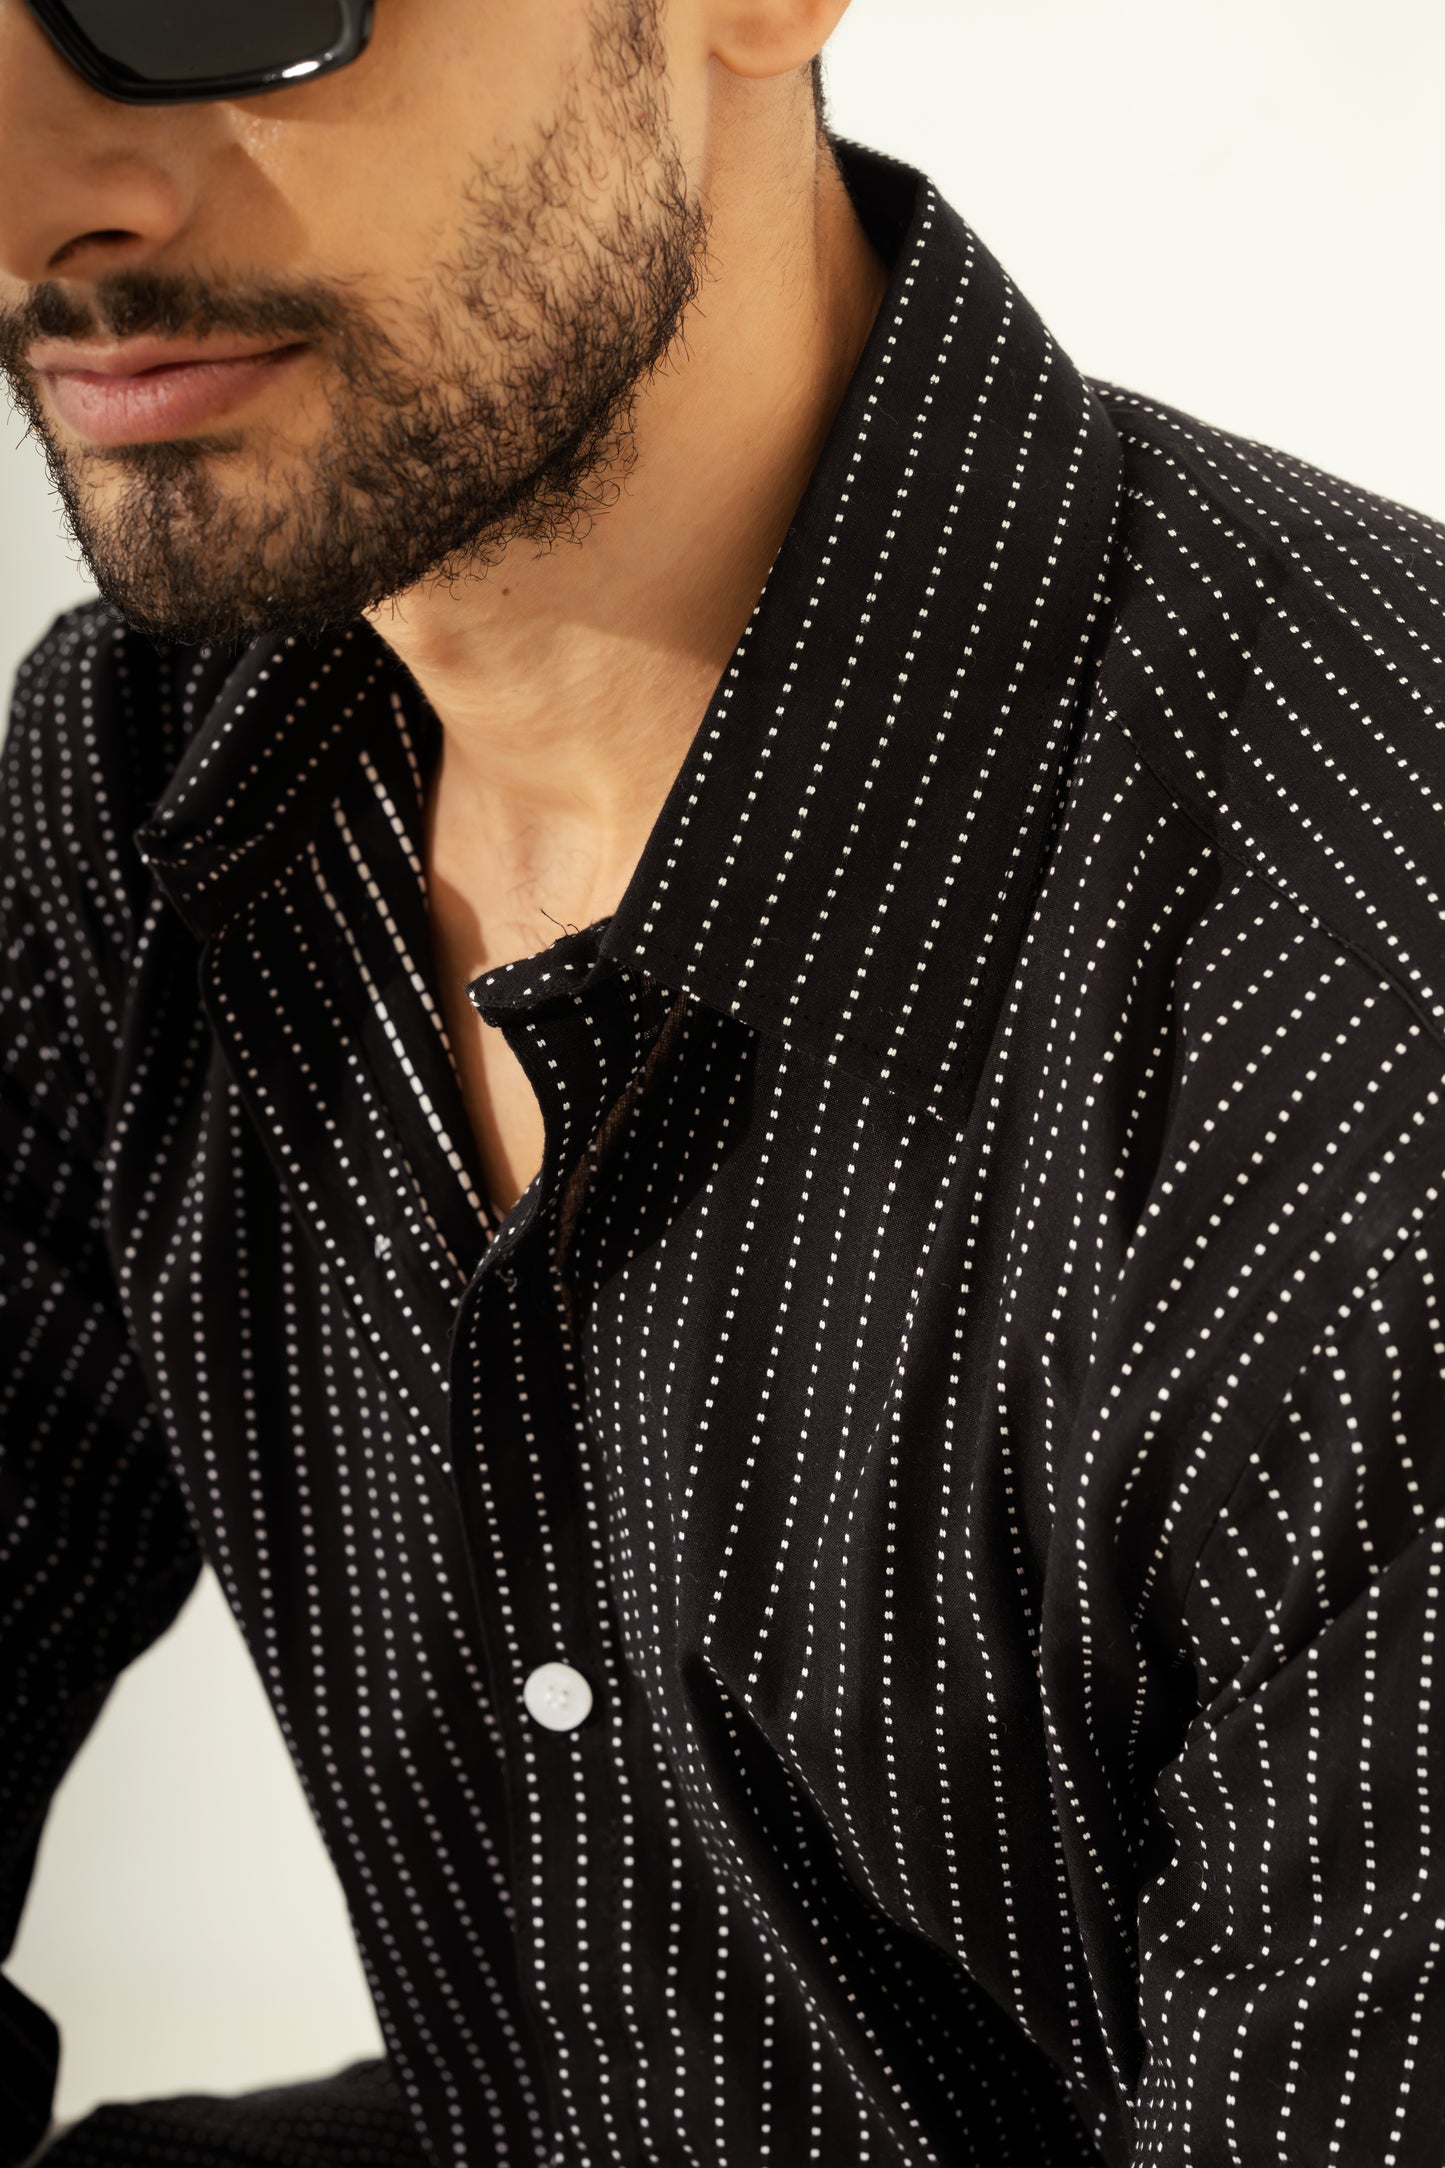 Textured dobby shirt in black